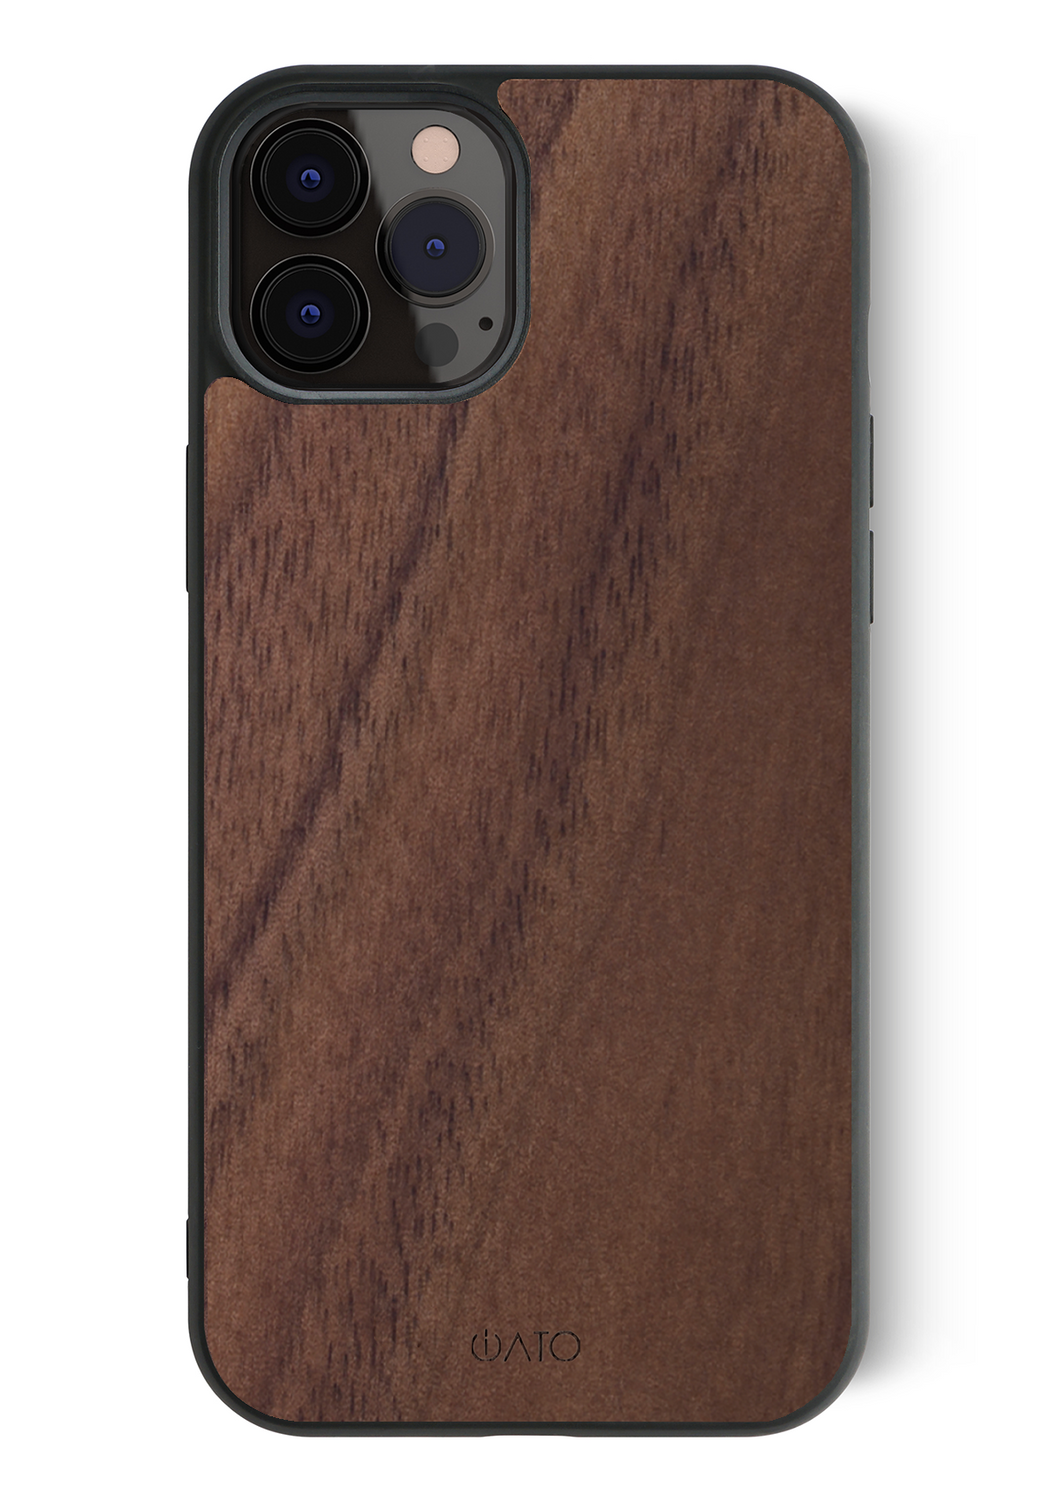 iPhone 11 Pro Max - iATO Walnut Wood Case - Protective Design. - iATO Awesome